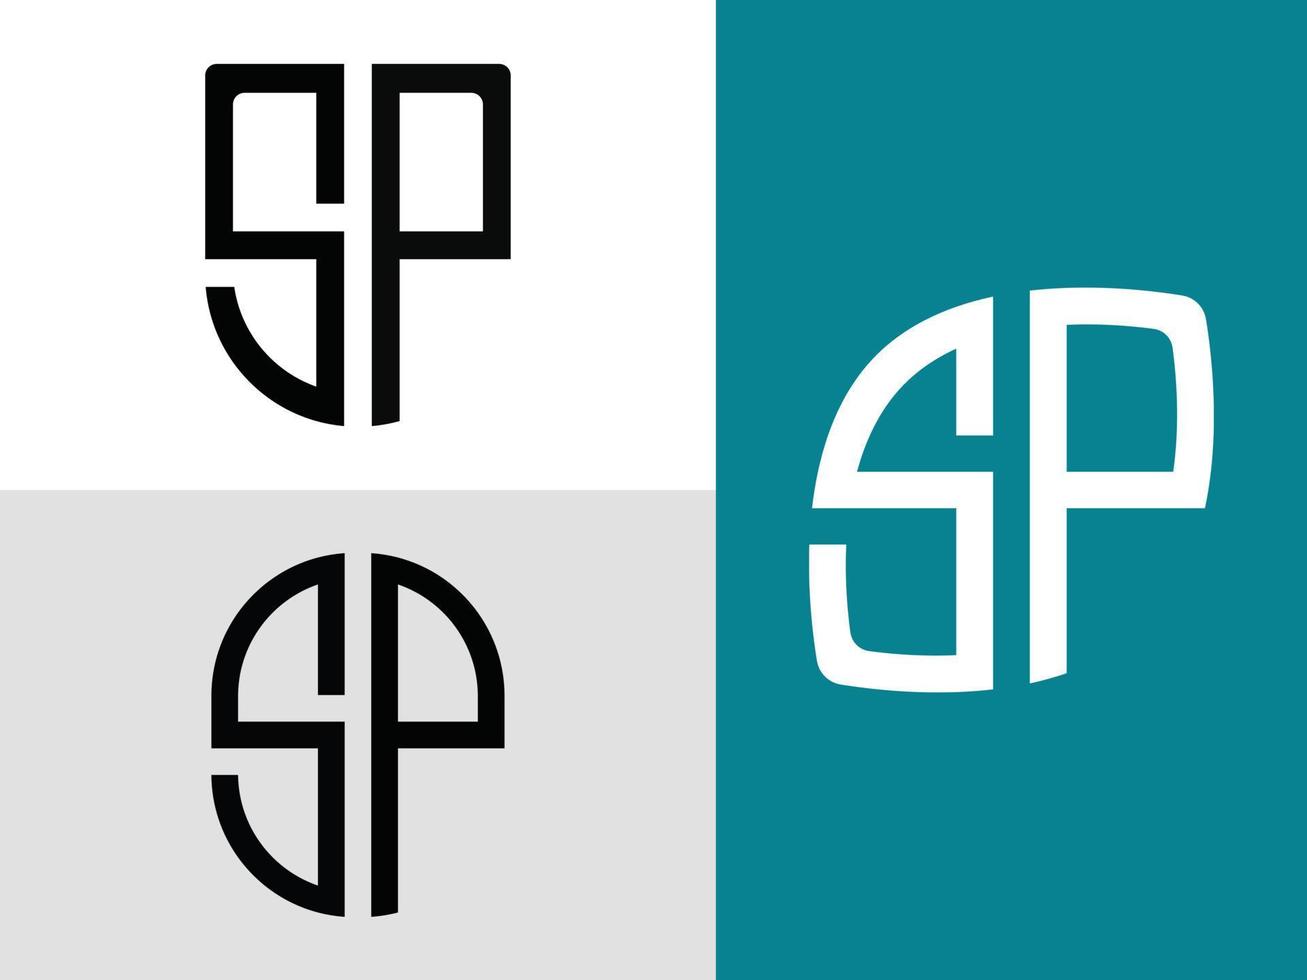 kreative anfangsbuchstaben sp-logo-designs paket. vektor